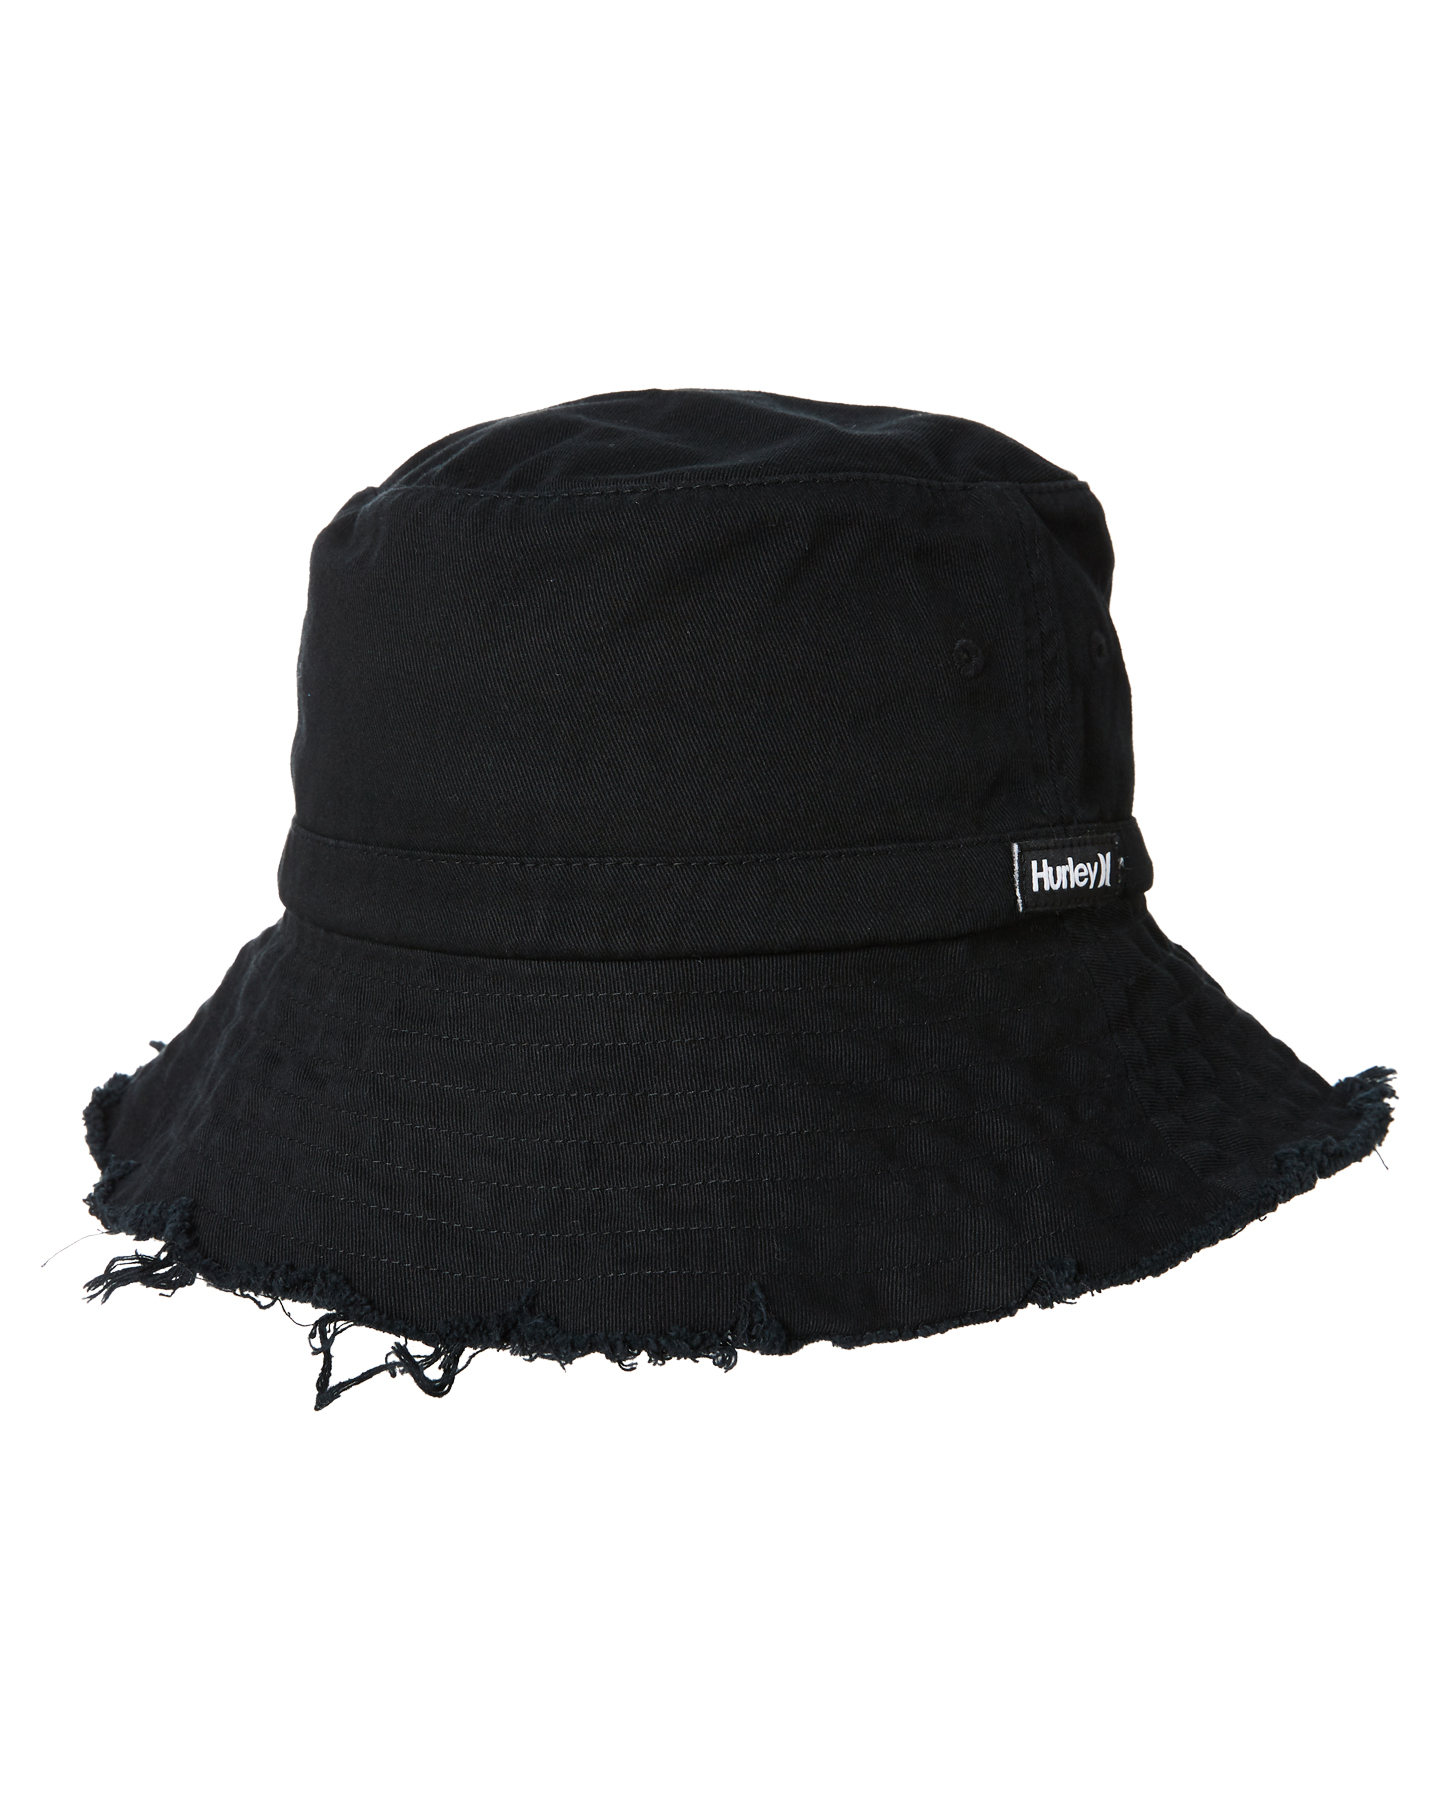 Hurley Fray Bucket Hat - Black | SurfStitch